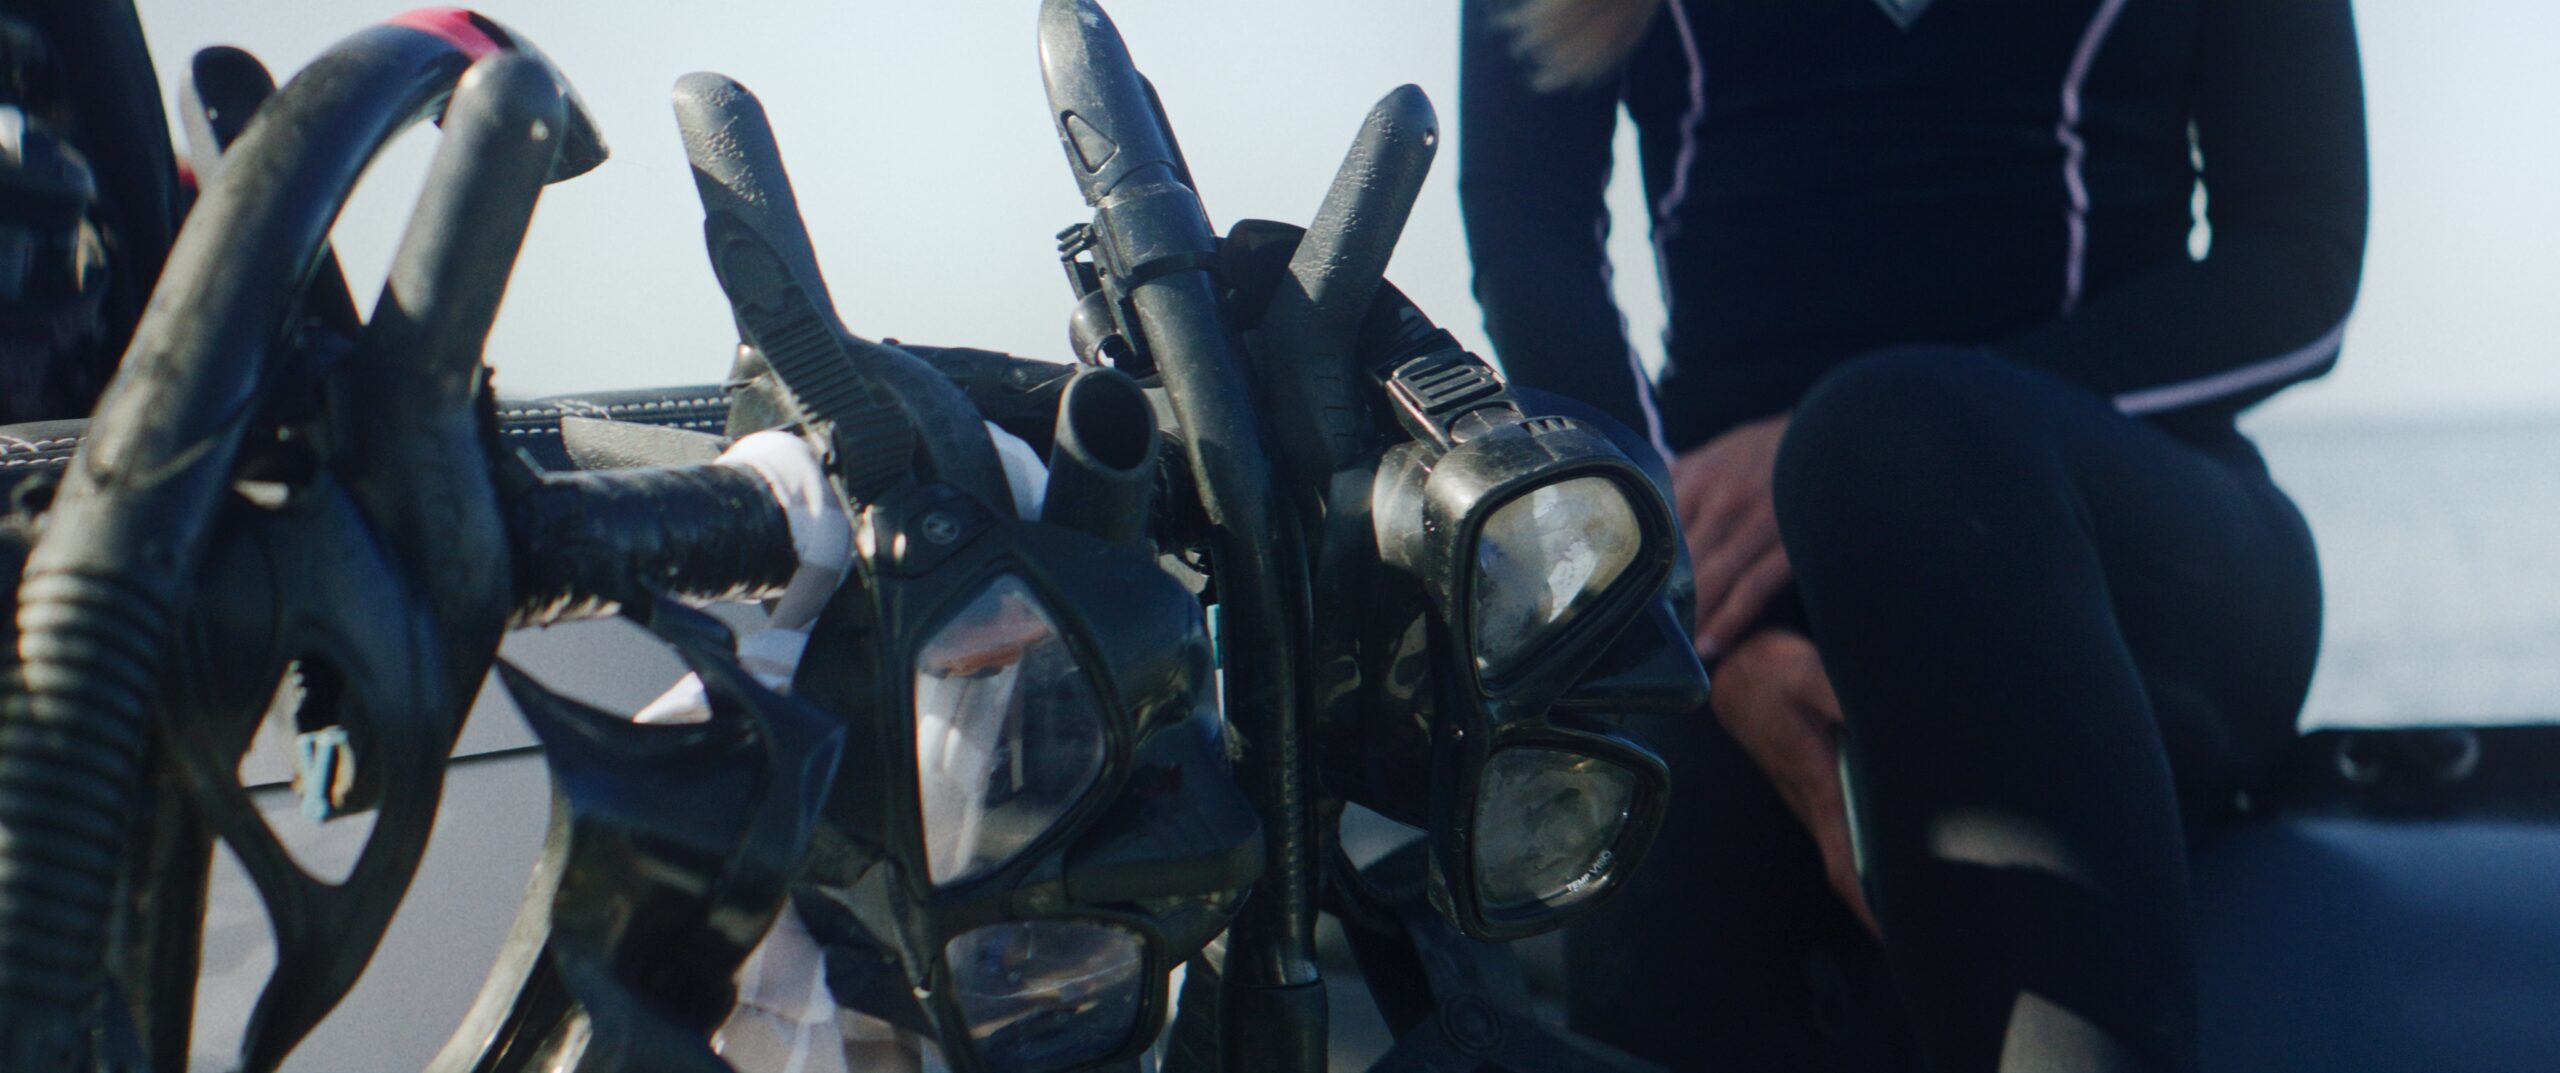 Diving gear including masks and snorkels